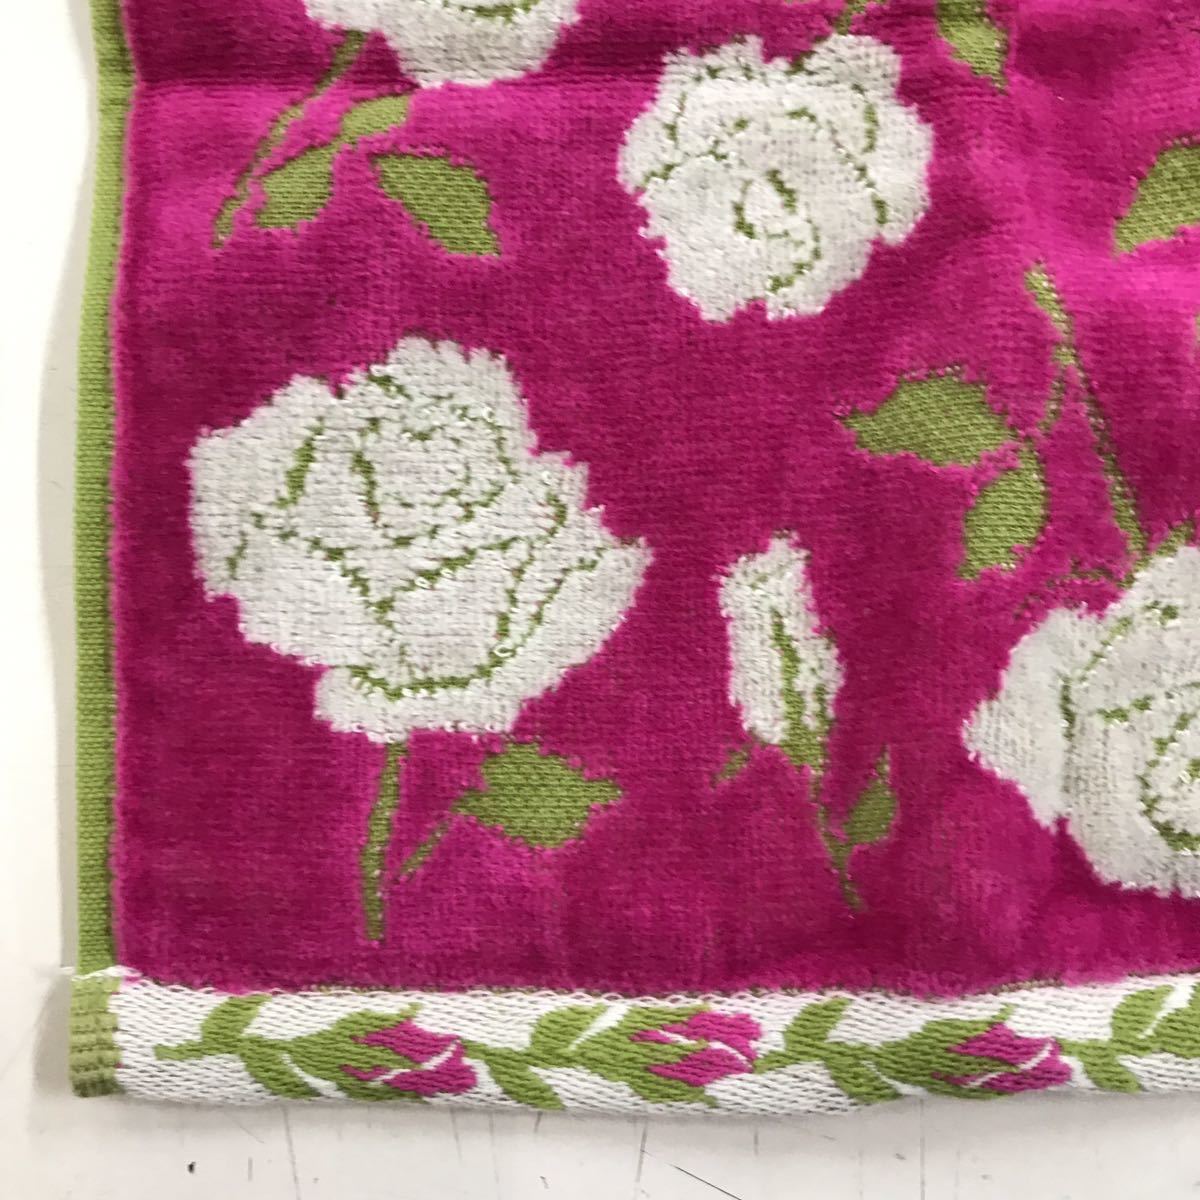  new goods now . towel rose pattern towel handkerchie made in Japan ( pink )